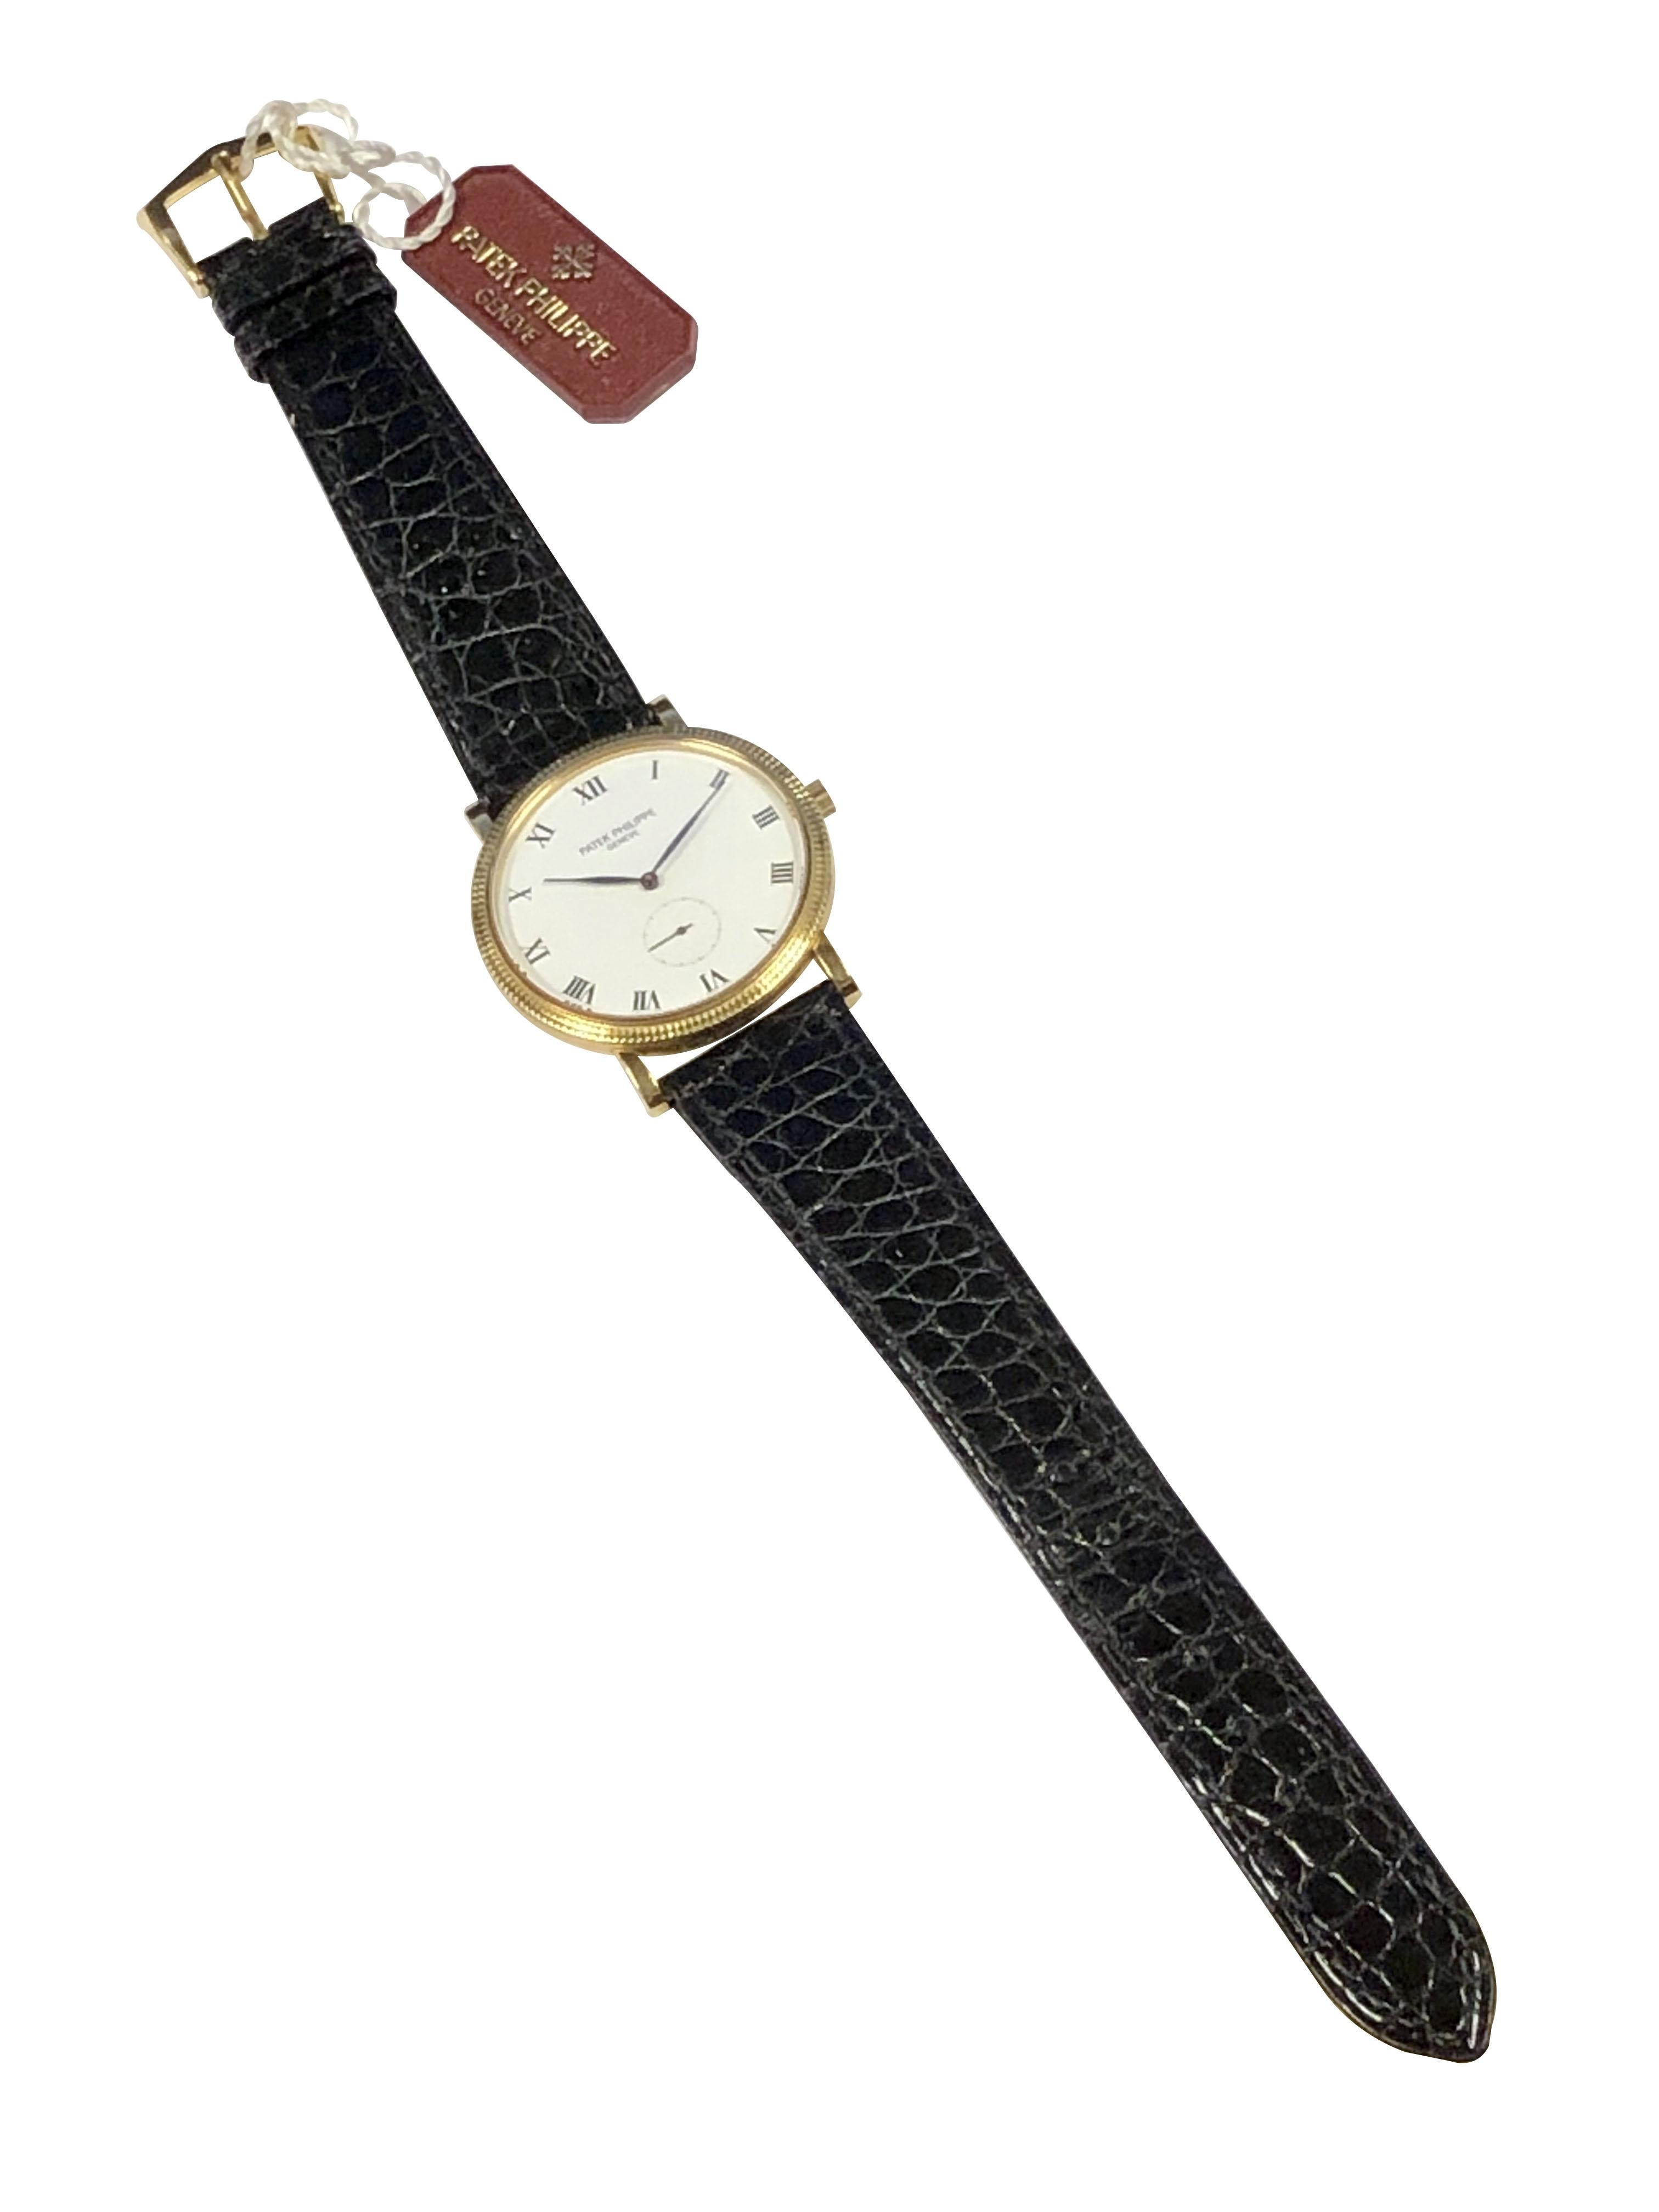 Patek Philippe Calatrava Ref 3919 Yellow Gold Mechanical Wrist Watch For Sale 1